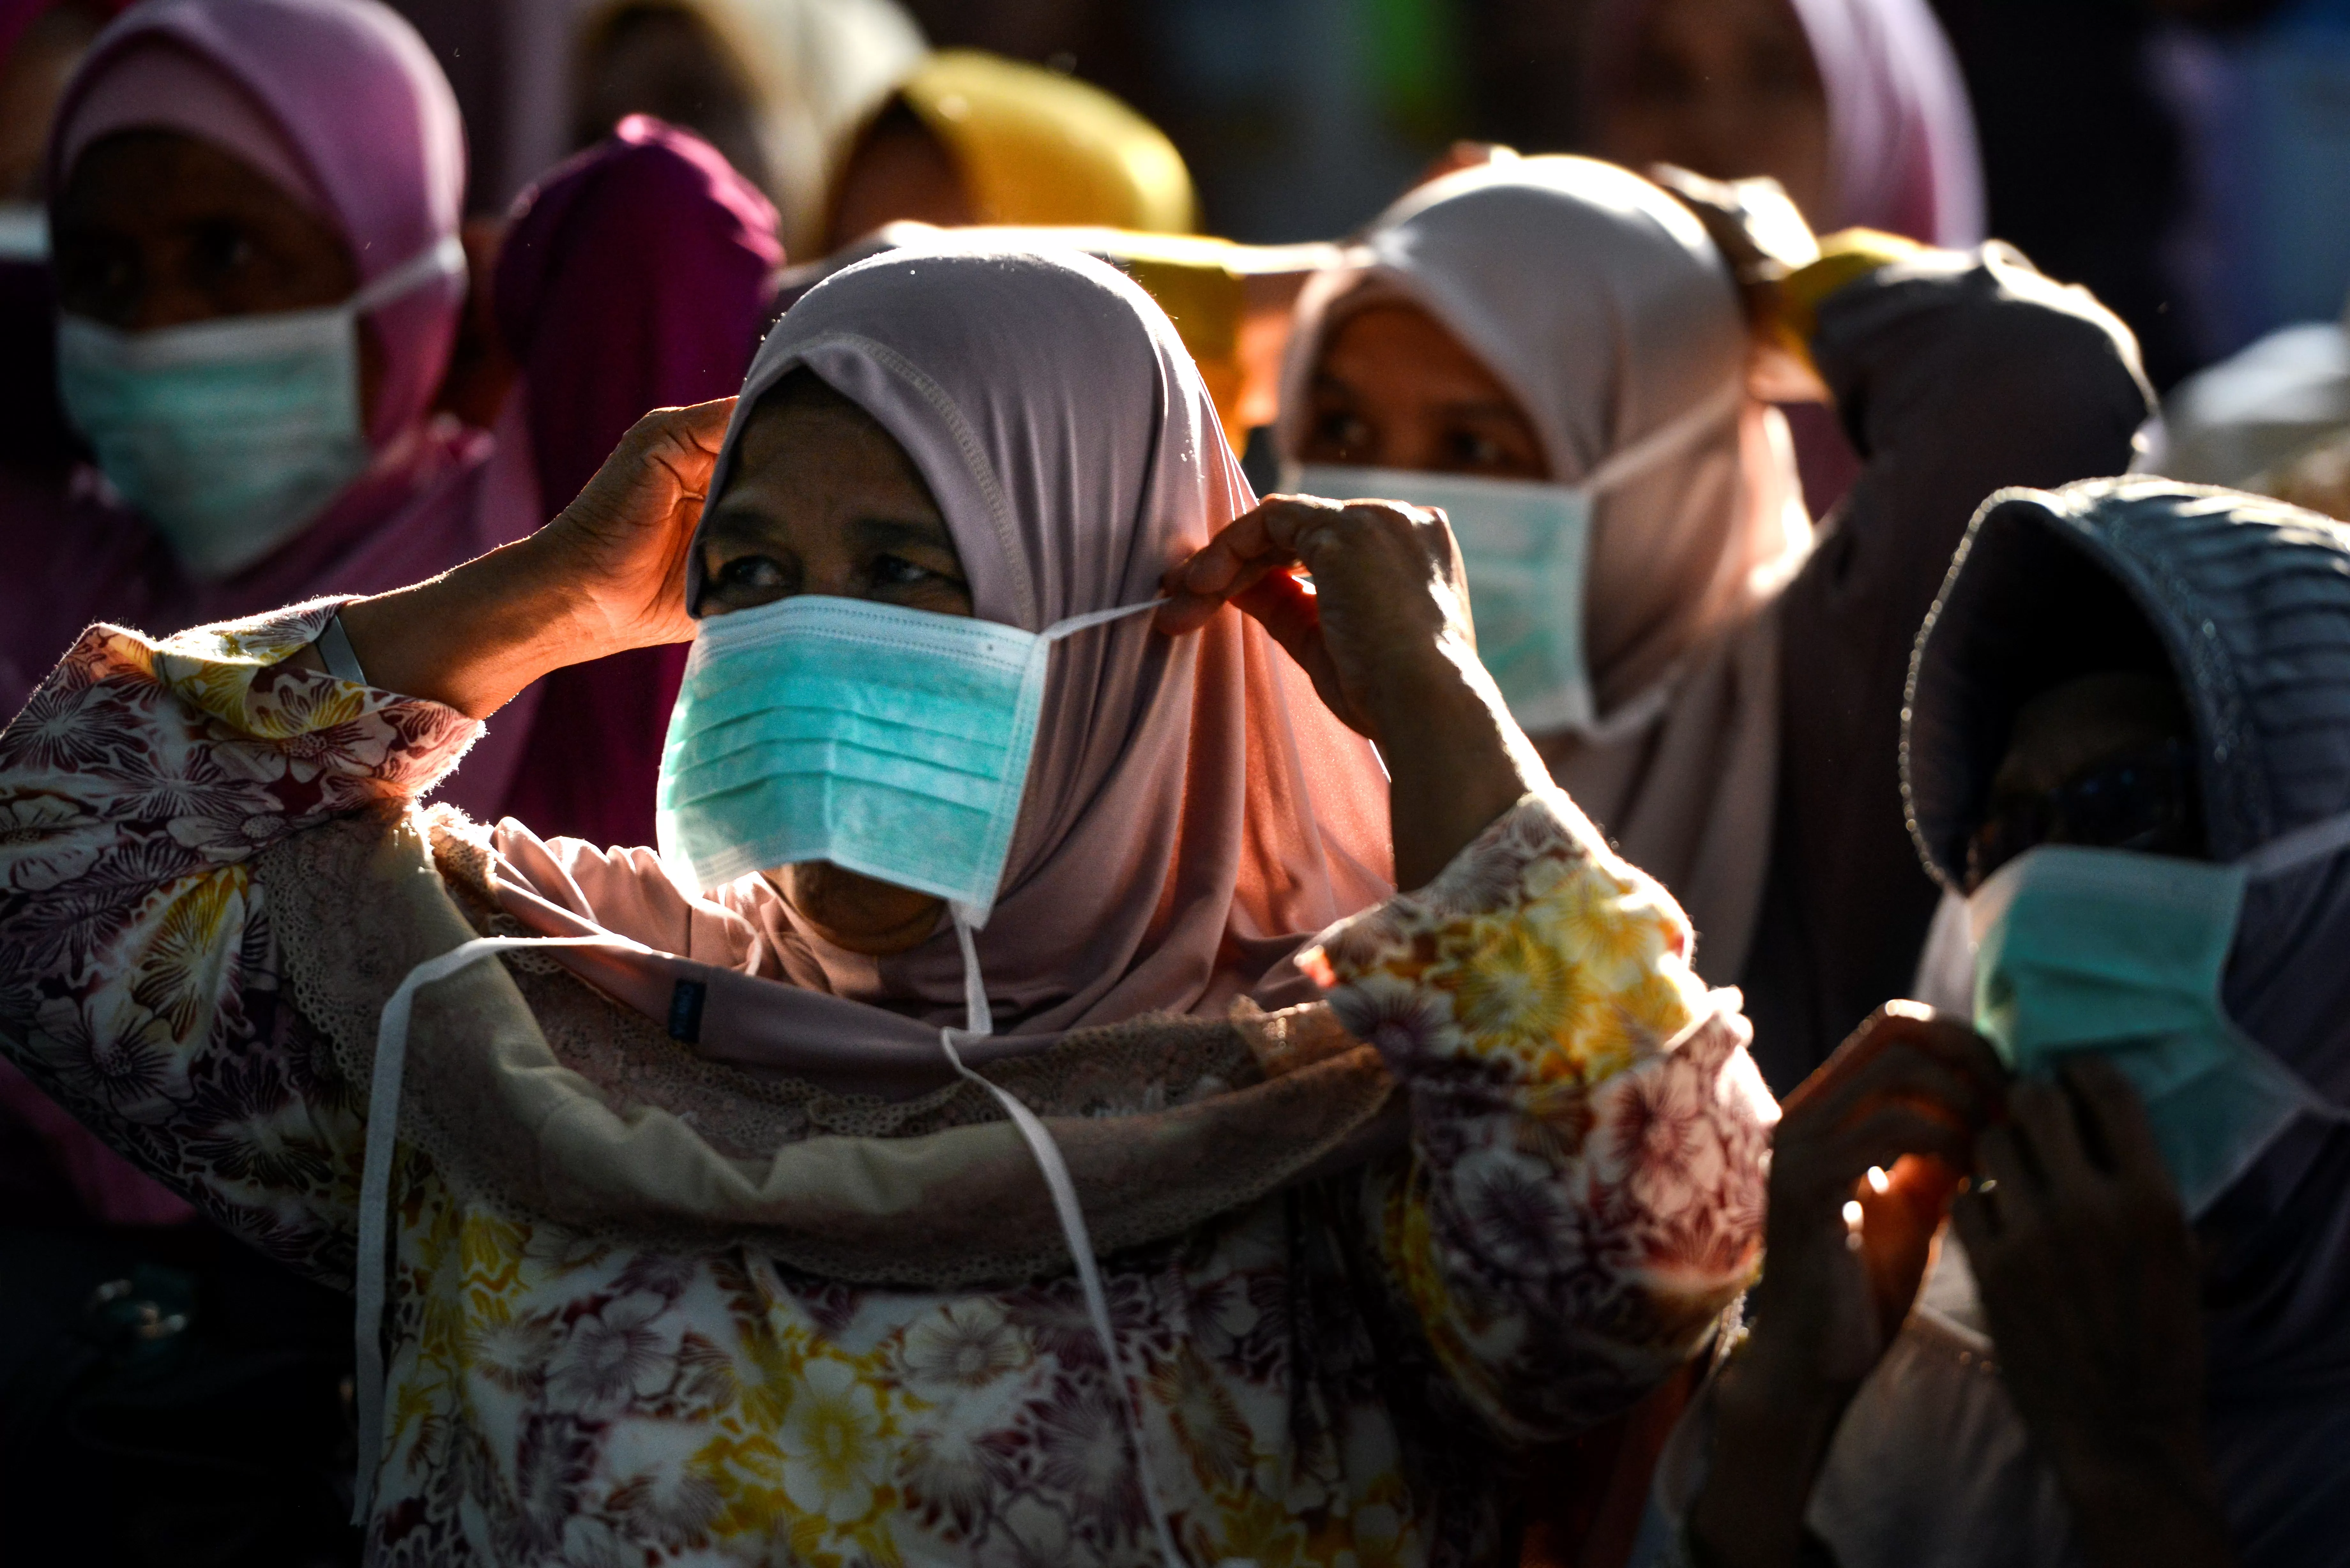 HILANG DI PASARAN: Para wanita mengenakan masker untuk mengantisipasi wabah corona. Masker menghilang di pasaran dalam beberapa pekan terakhir. | Foto: CHAIDEER MAHYUDDIN/AFP